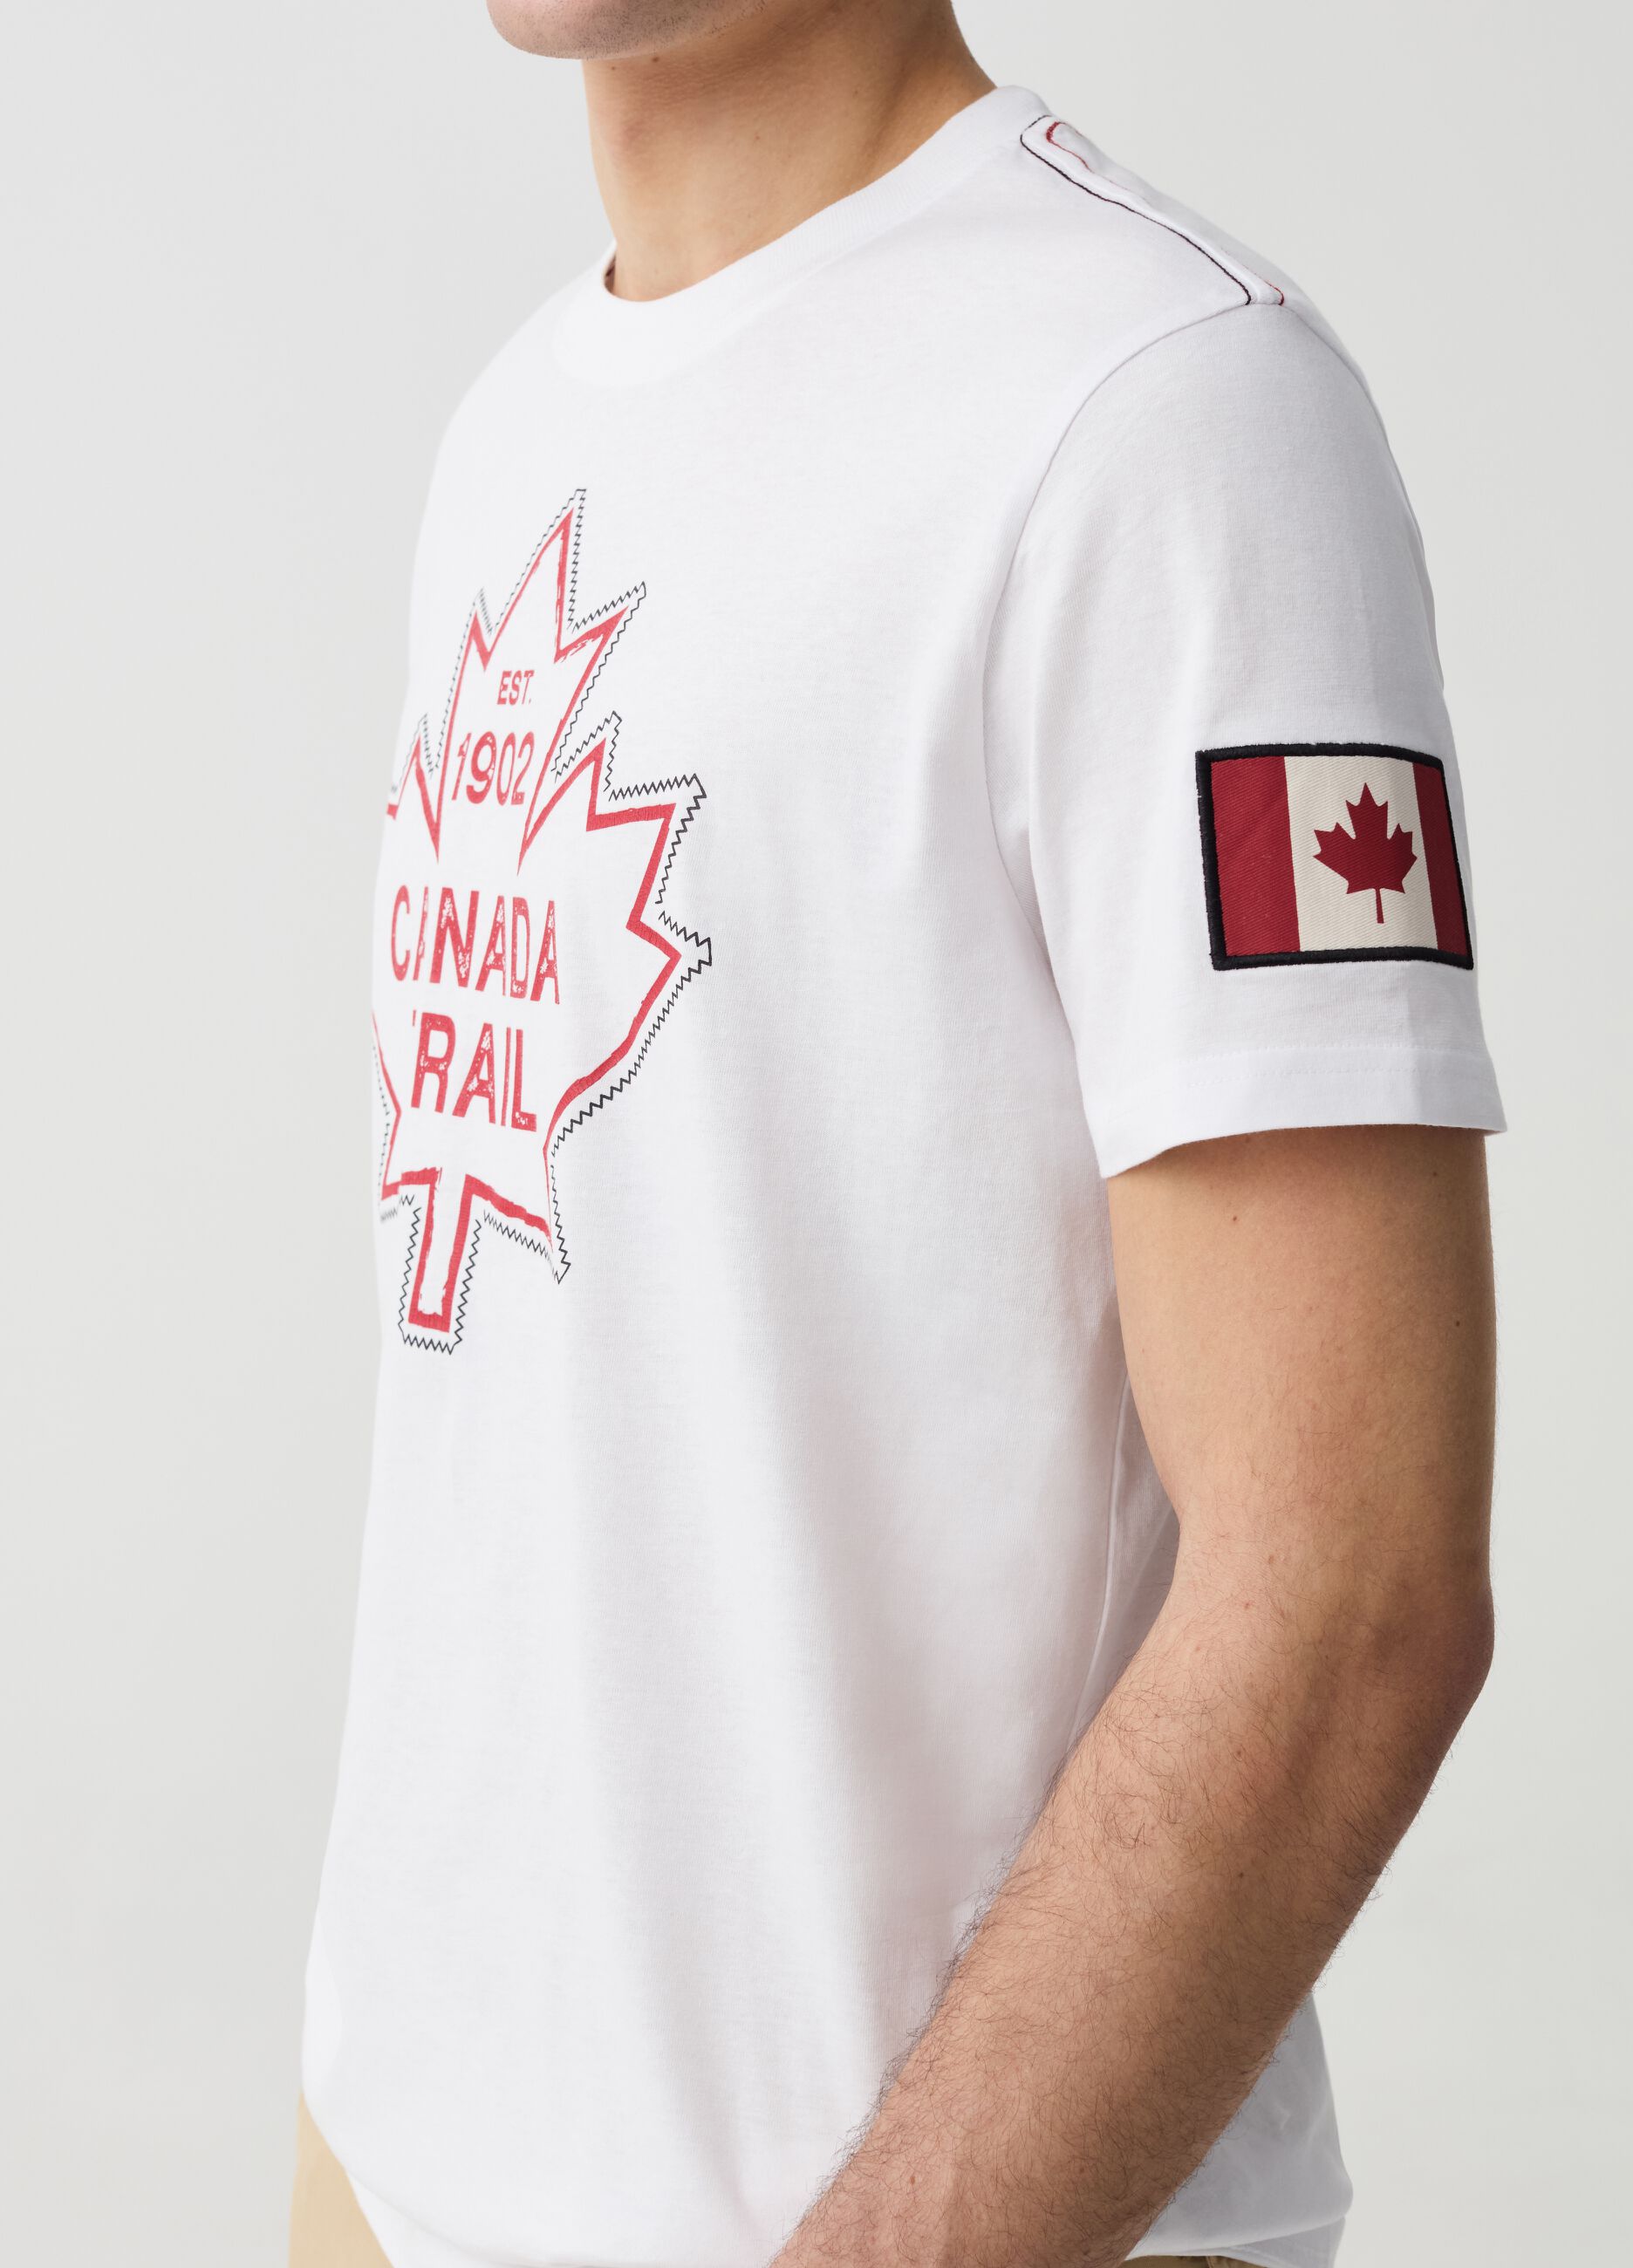 T-shirt con cuciture a contrasto Canada Trail